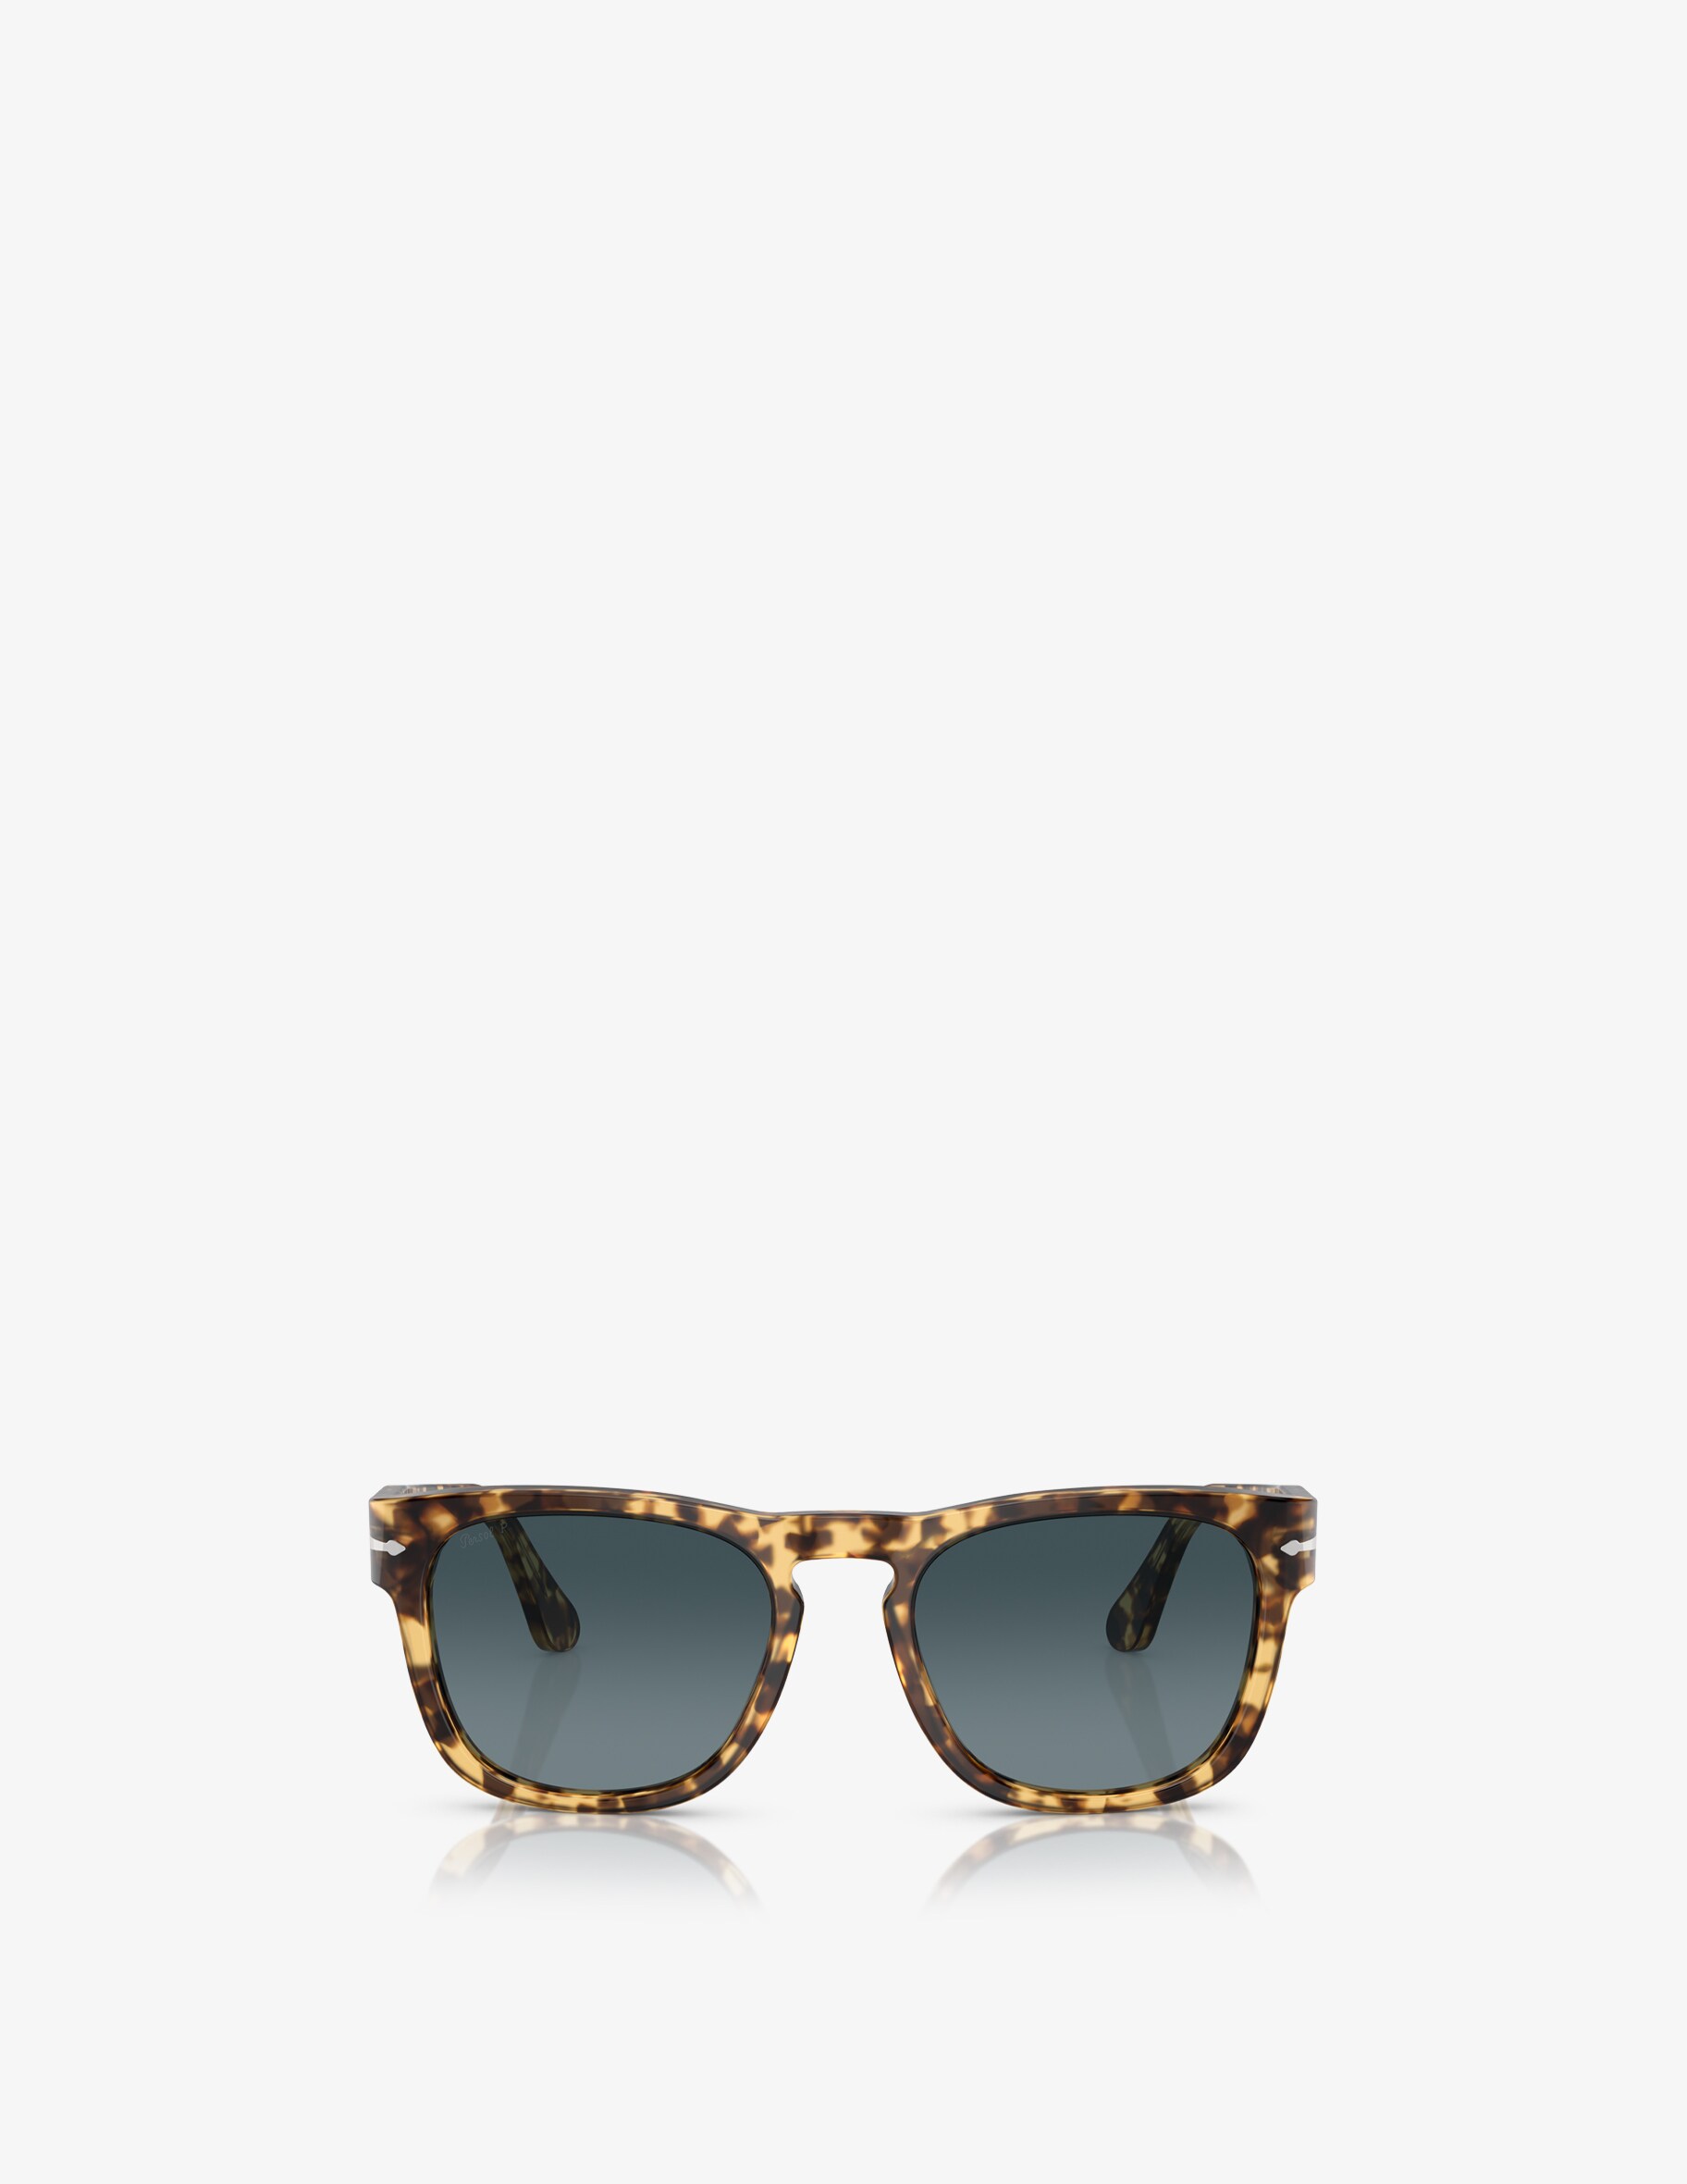 Солнцезащитные очки в квадратной оправе Persol, цвет Marrone цена и фото